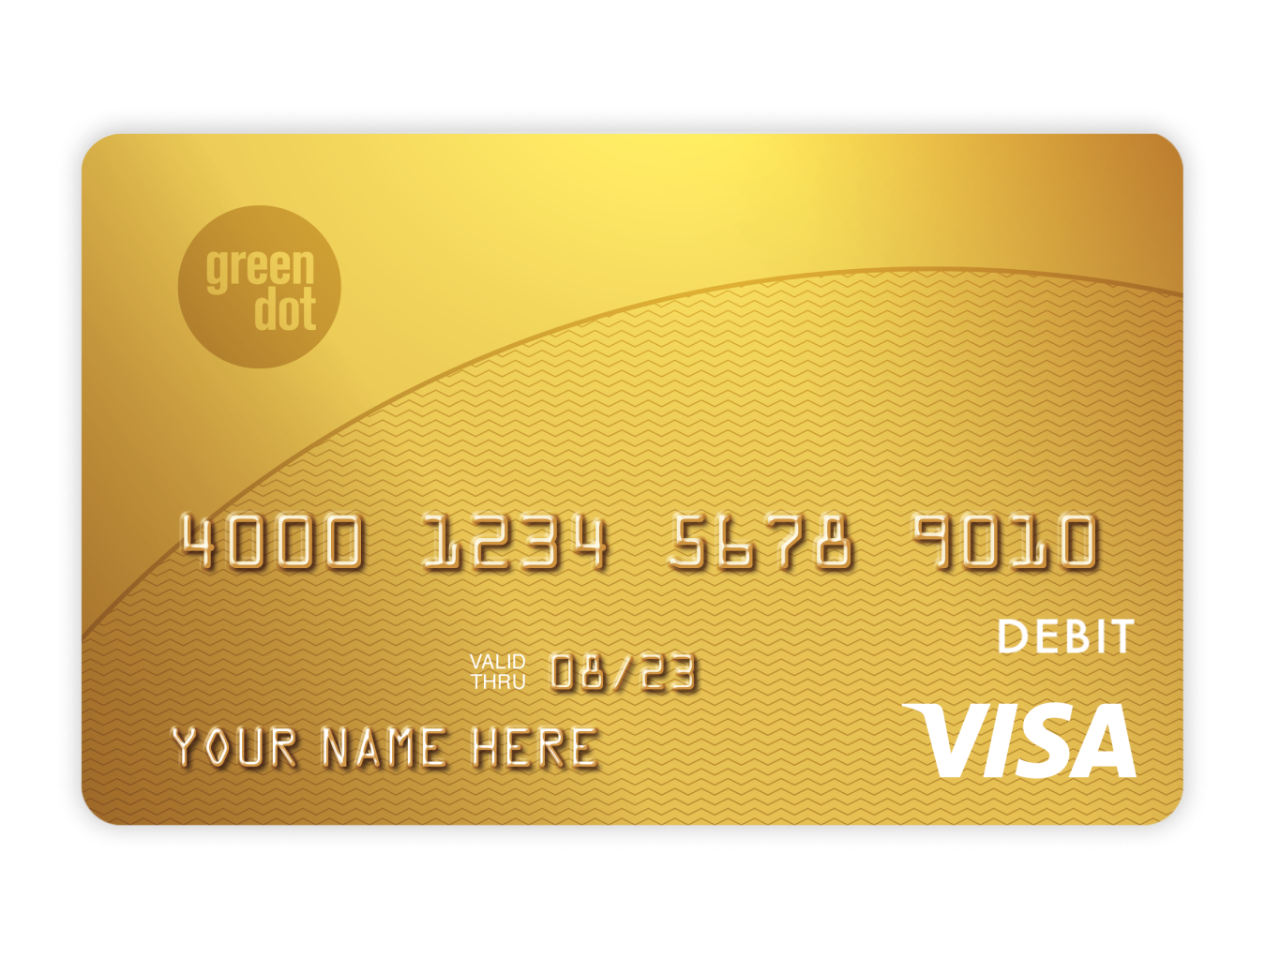 Green Dot Prepaid Card Review - NerdWallet